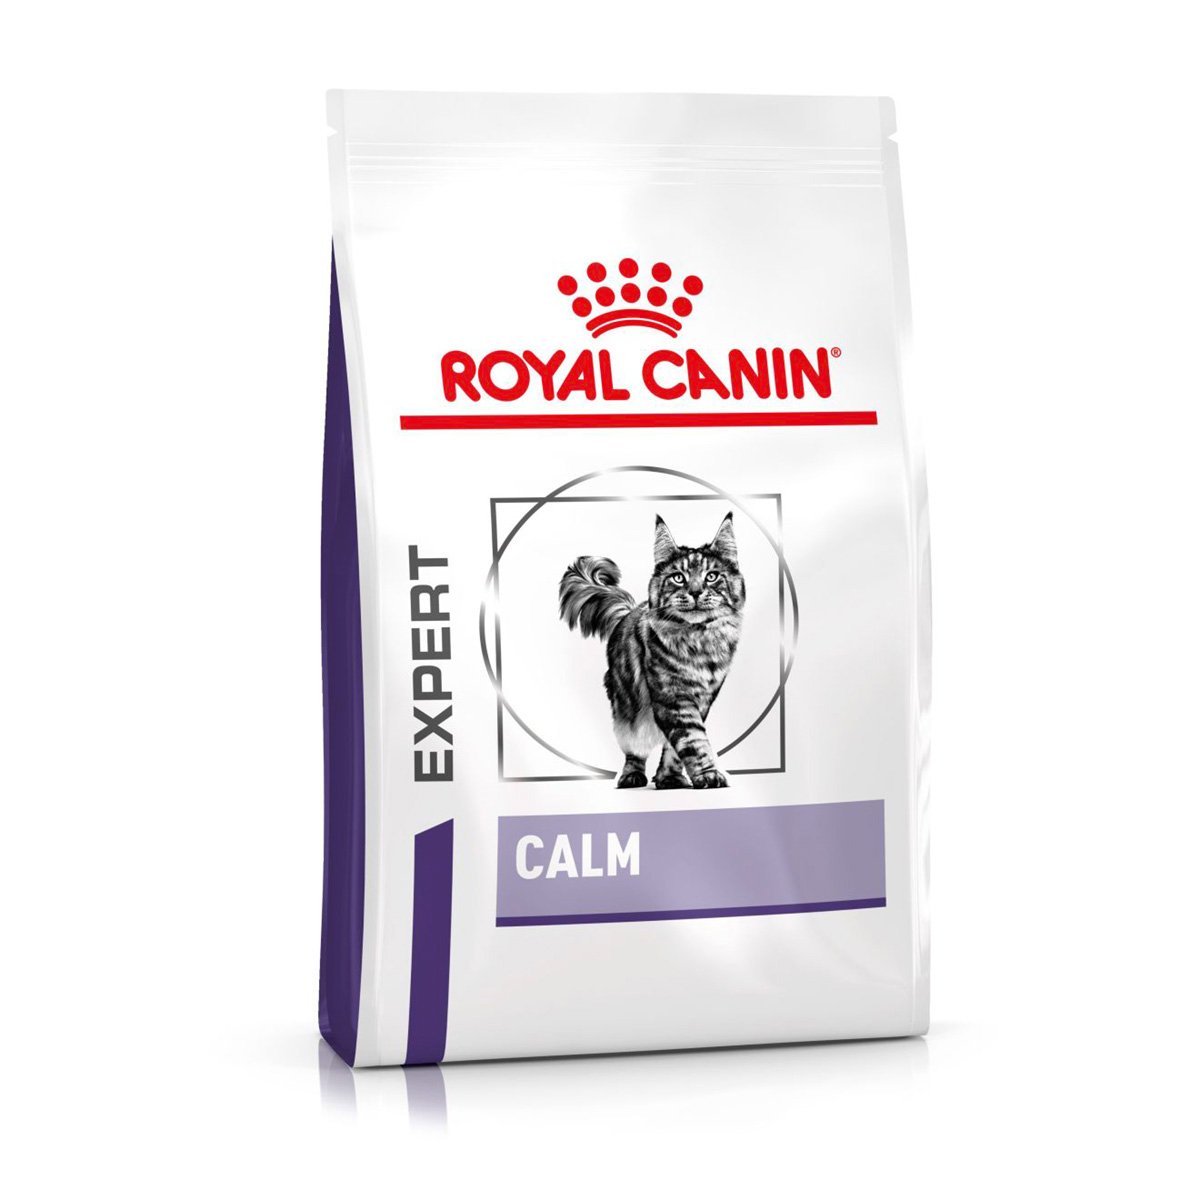 ROYAL CANIN® Expert CALM Trockenfutter für Katzen 4kg von Royal Canin